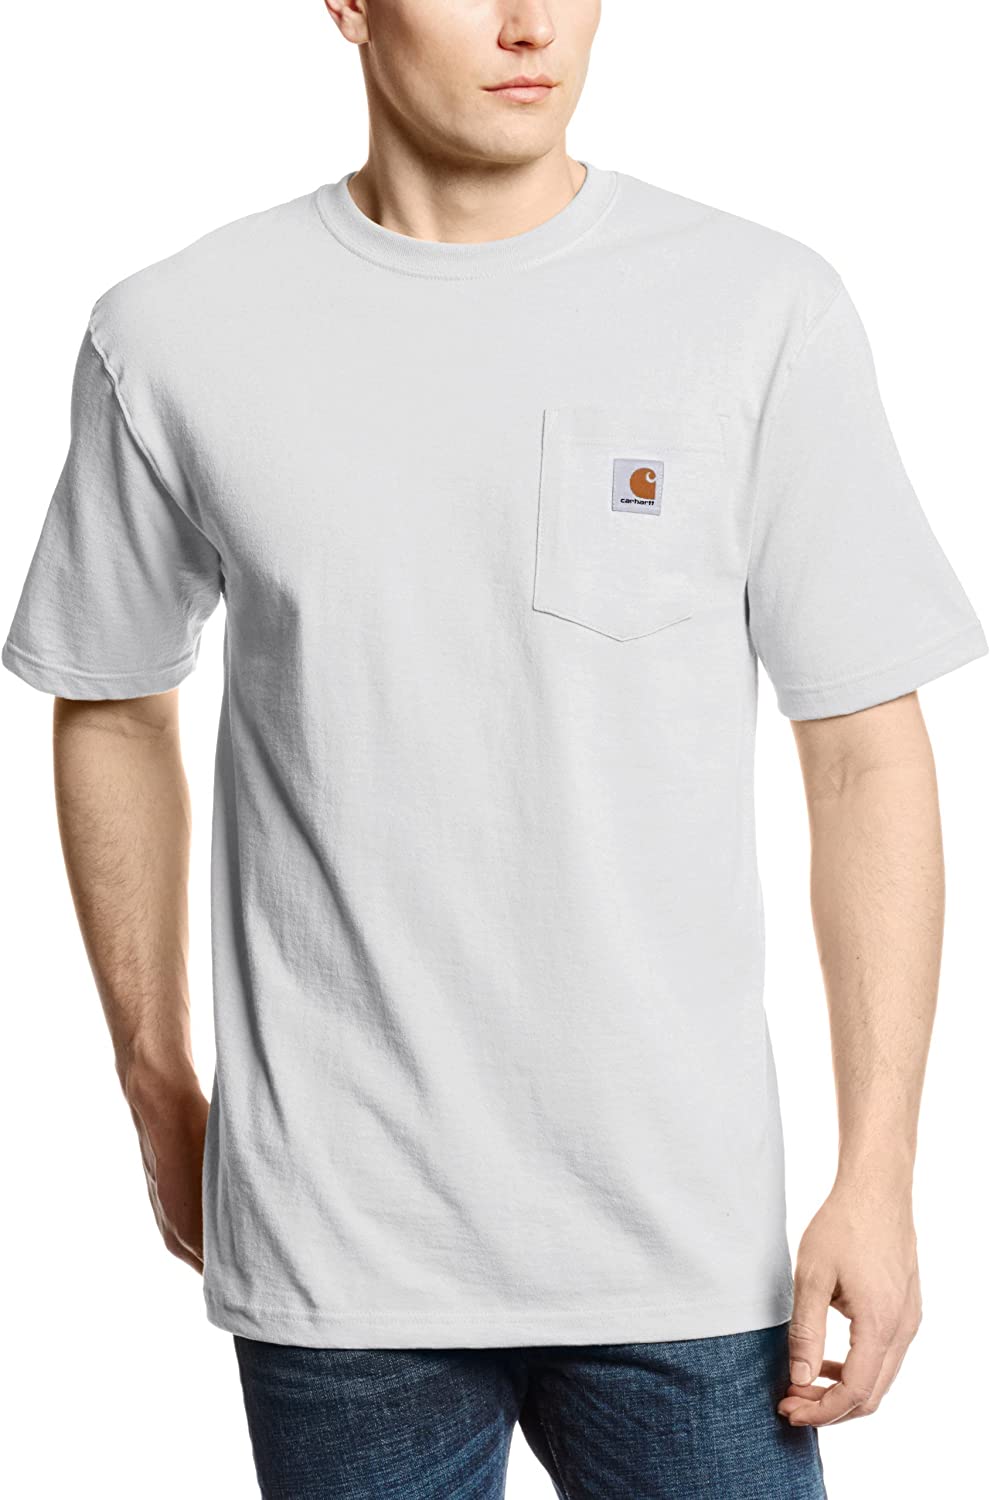 K87 Workwear Camiseta de Manga Corta Hombre Tallas Regulares y Grandes y Altas Carhartt Workwear Pocket Short-Sleeve T-Shirt 